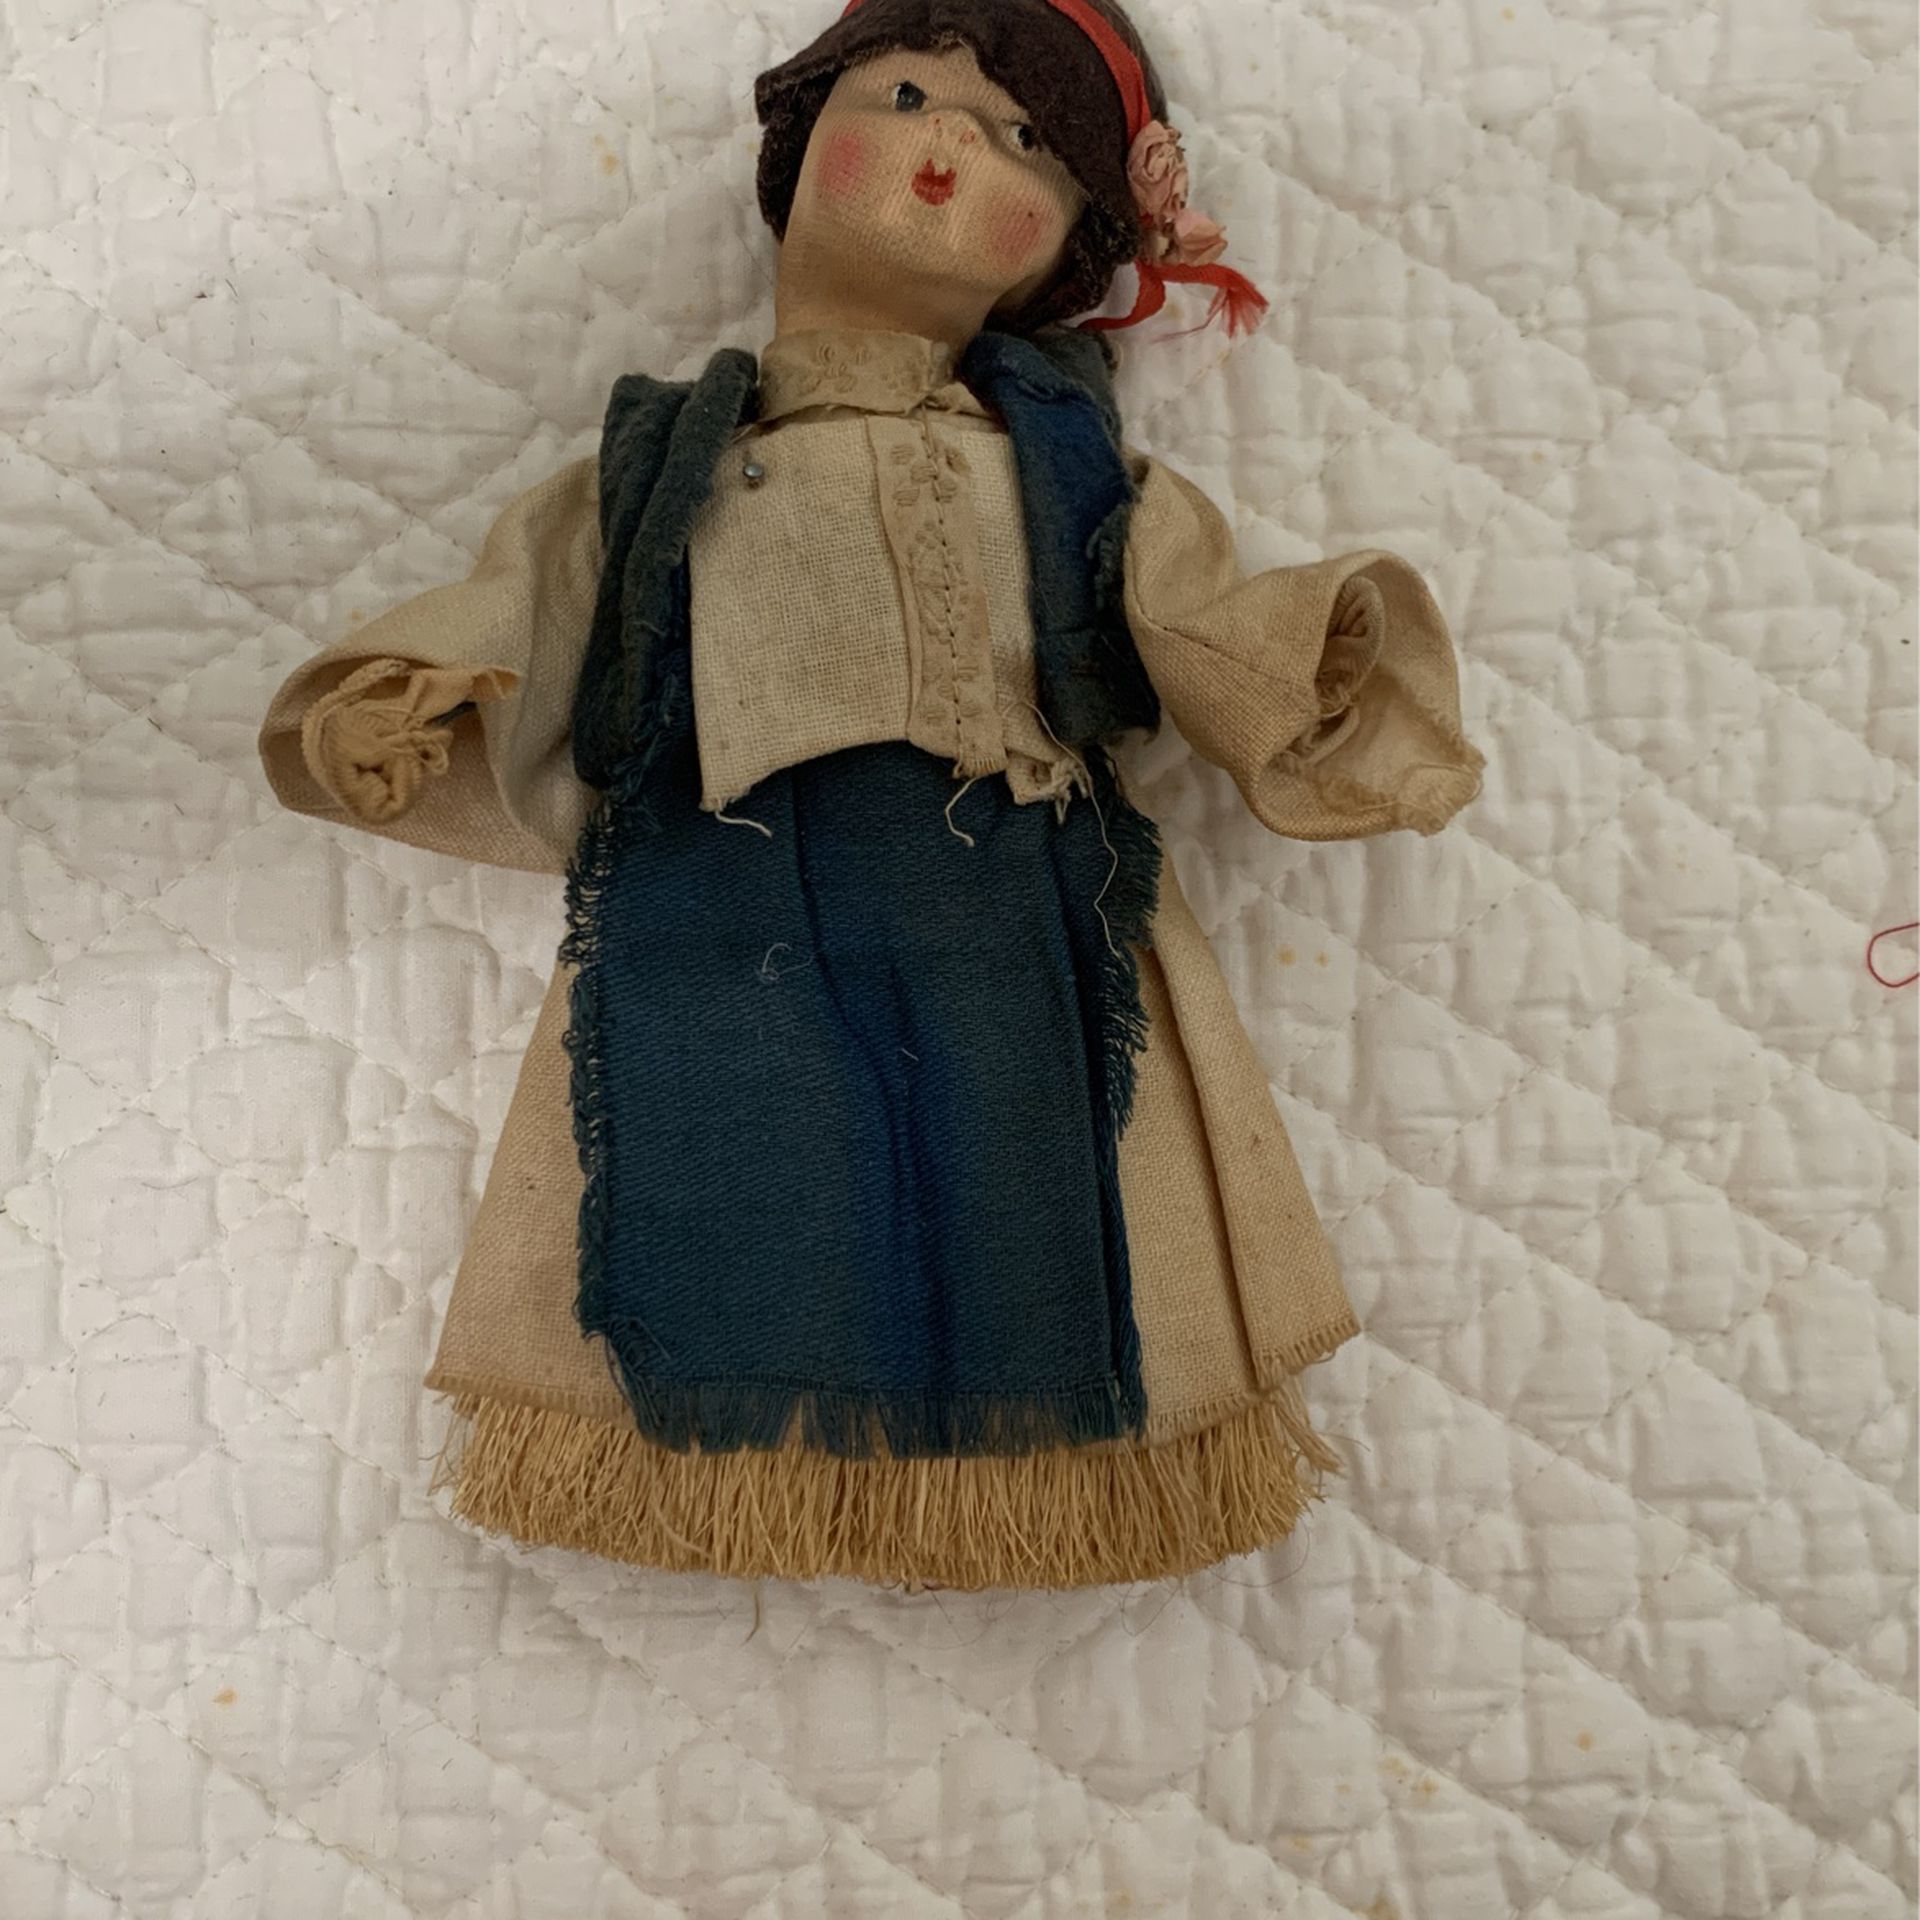 Lenci- Type  Antique  Doll